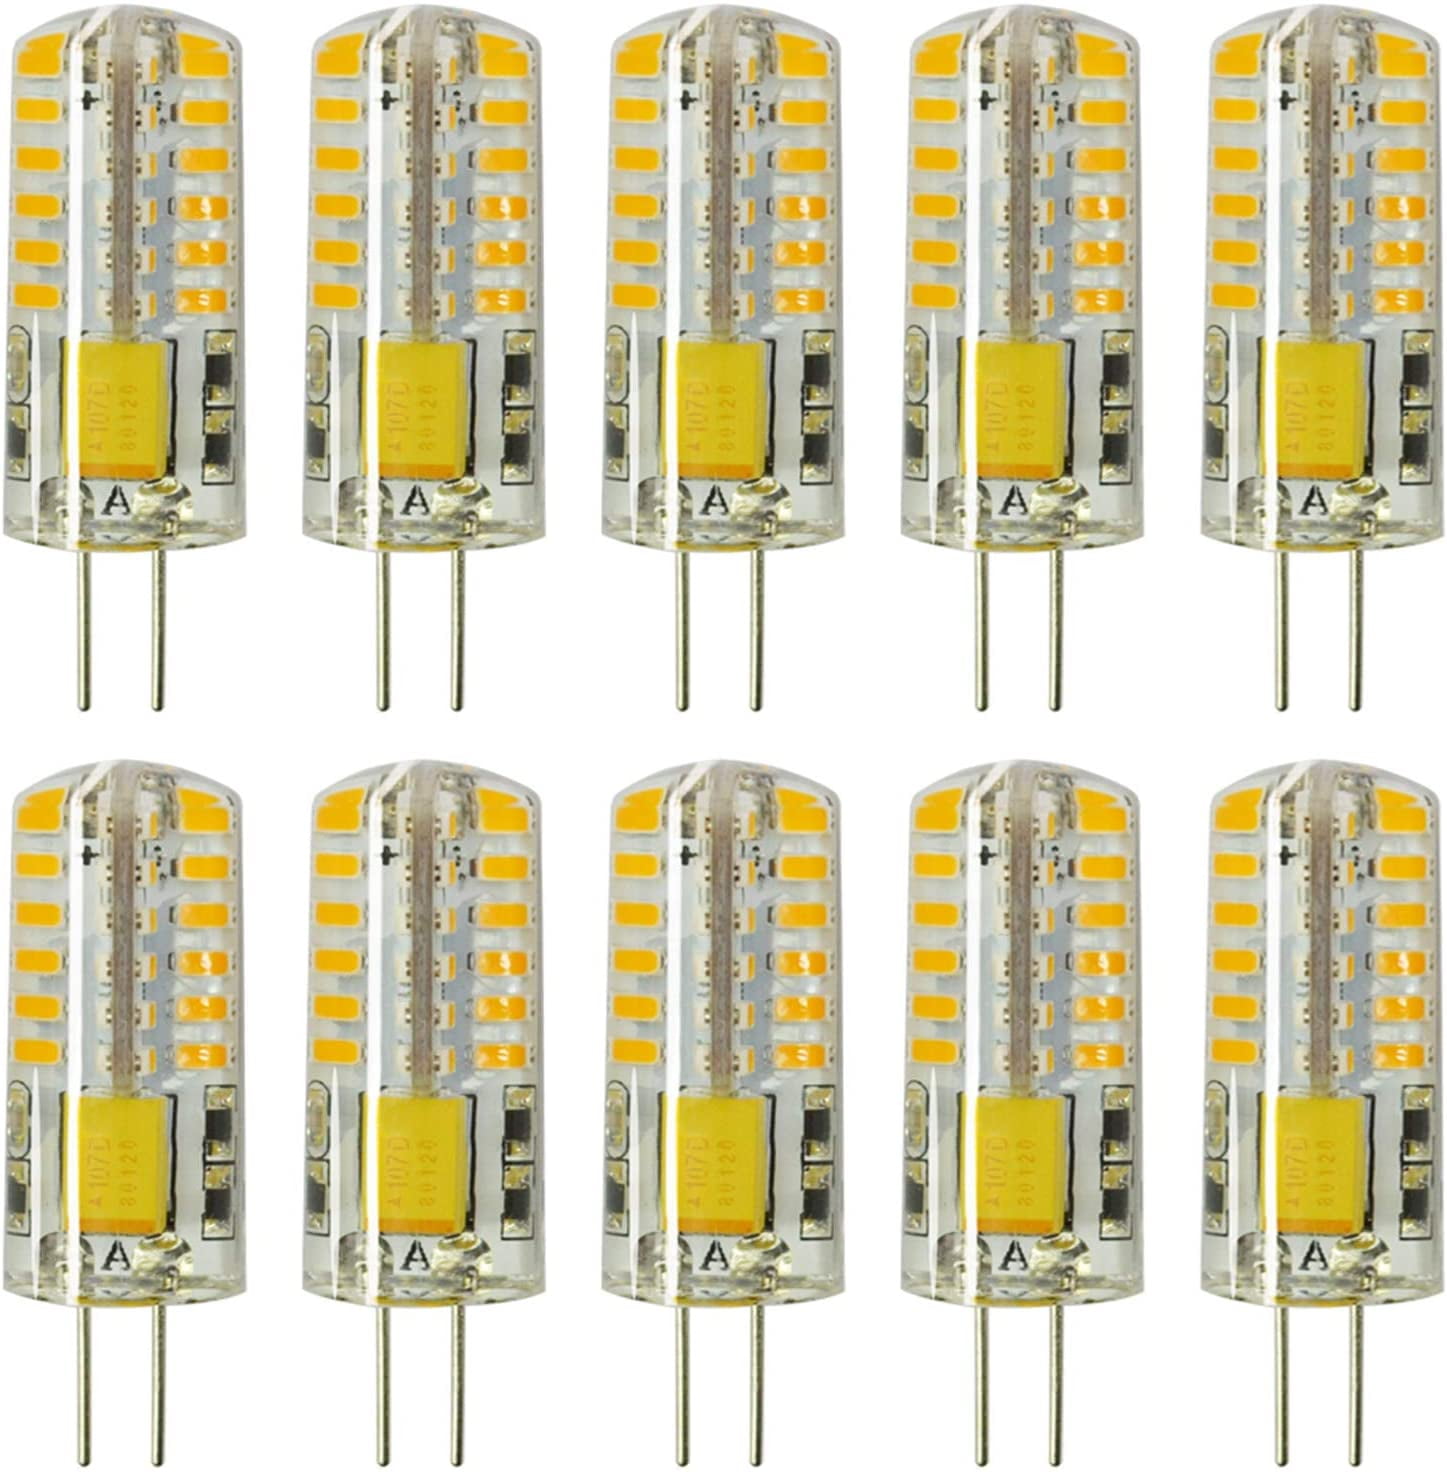 10pcs G4 LED Bulbs JC Bi-Pin Base Light Bulbs 3W AC/DC 12V 20W-30W Halogen Bulb Replacement Landscape Bulbs(Warm White 3000K) - Walmart.com